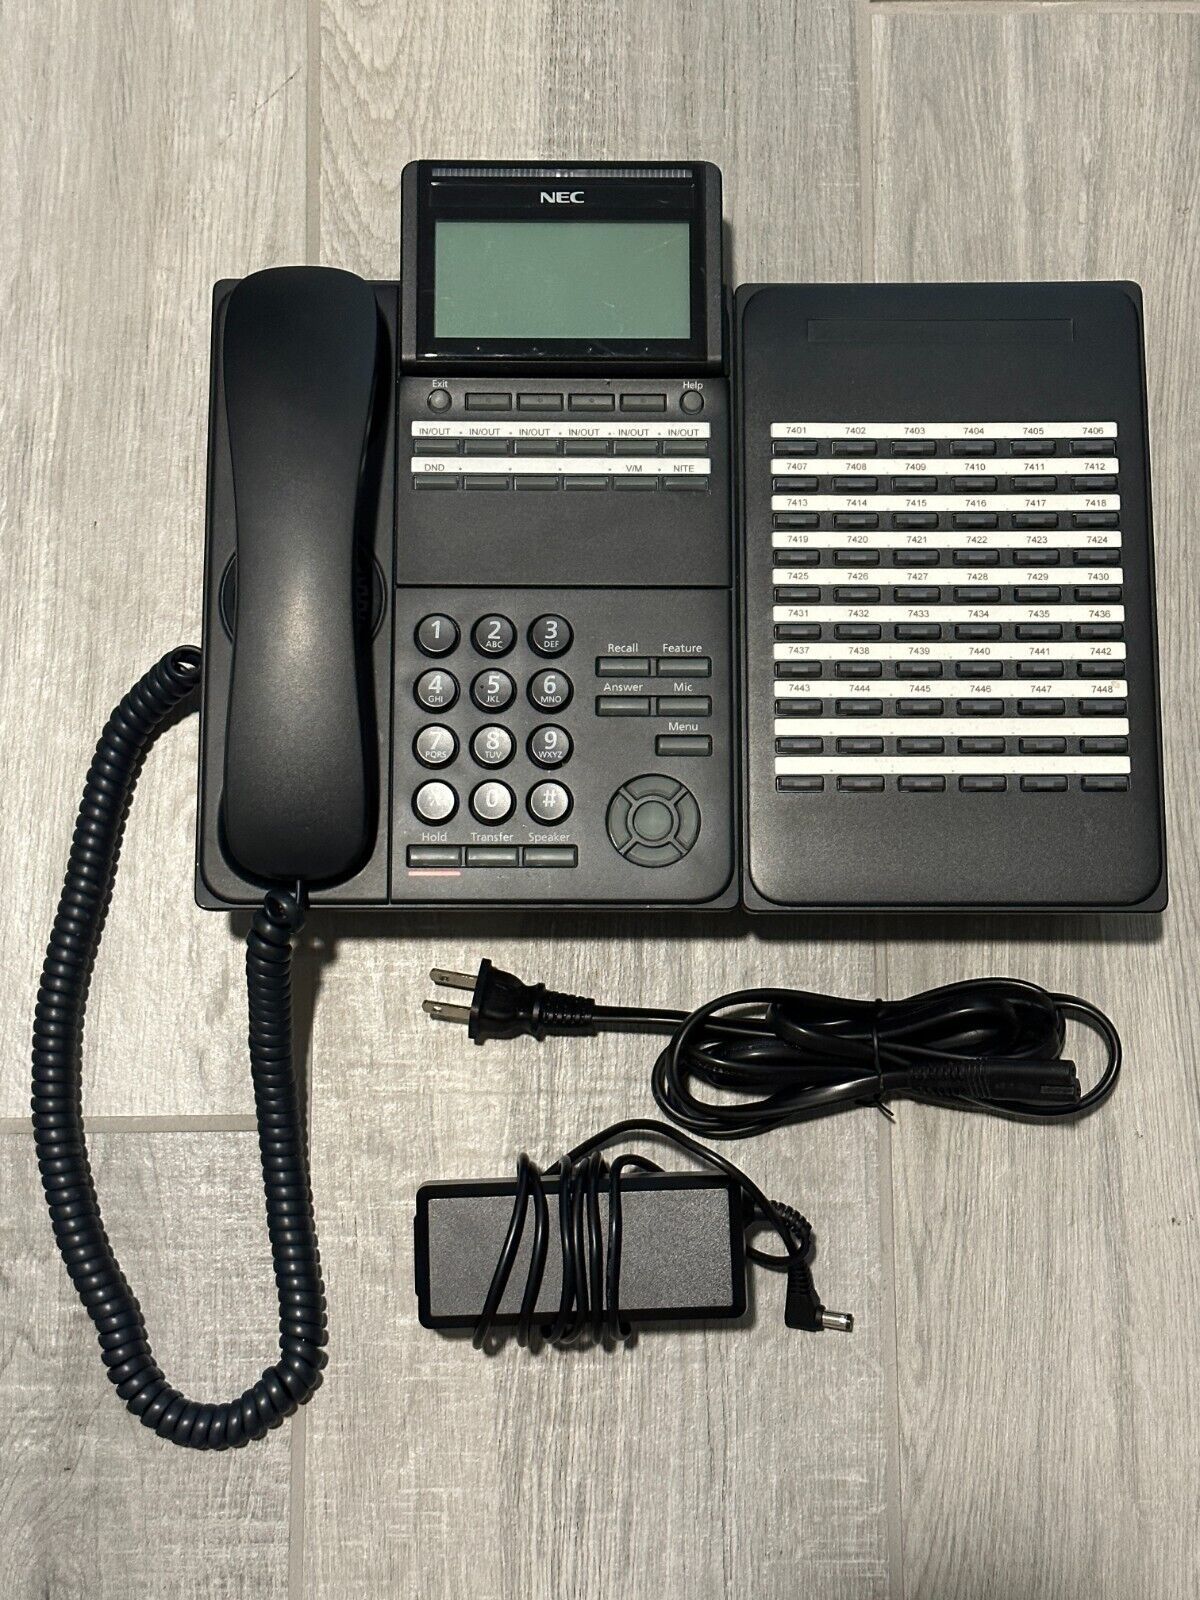 NEC DTK-12D-1 (BK) + DCK-60-1(BK) DT500 Series Digital Office Phone with cord - $183.14